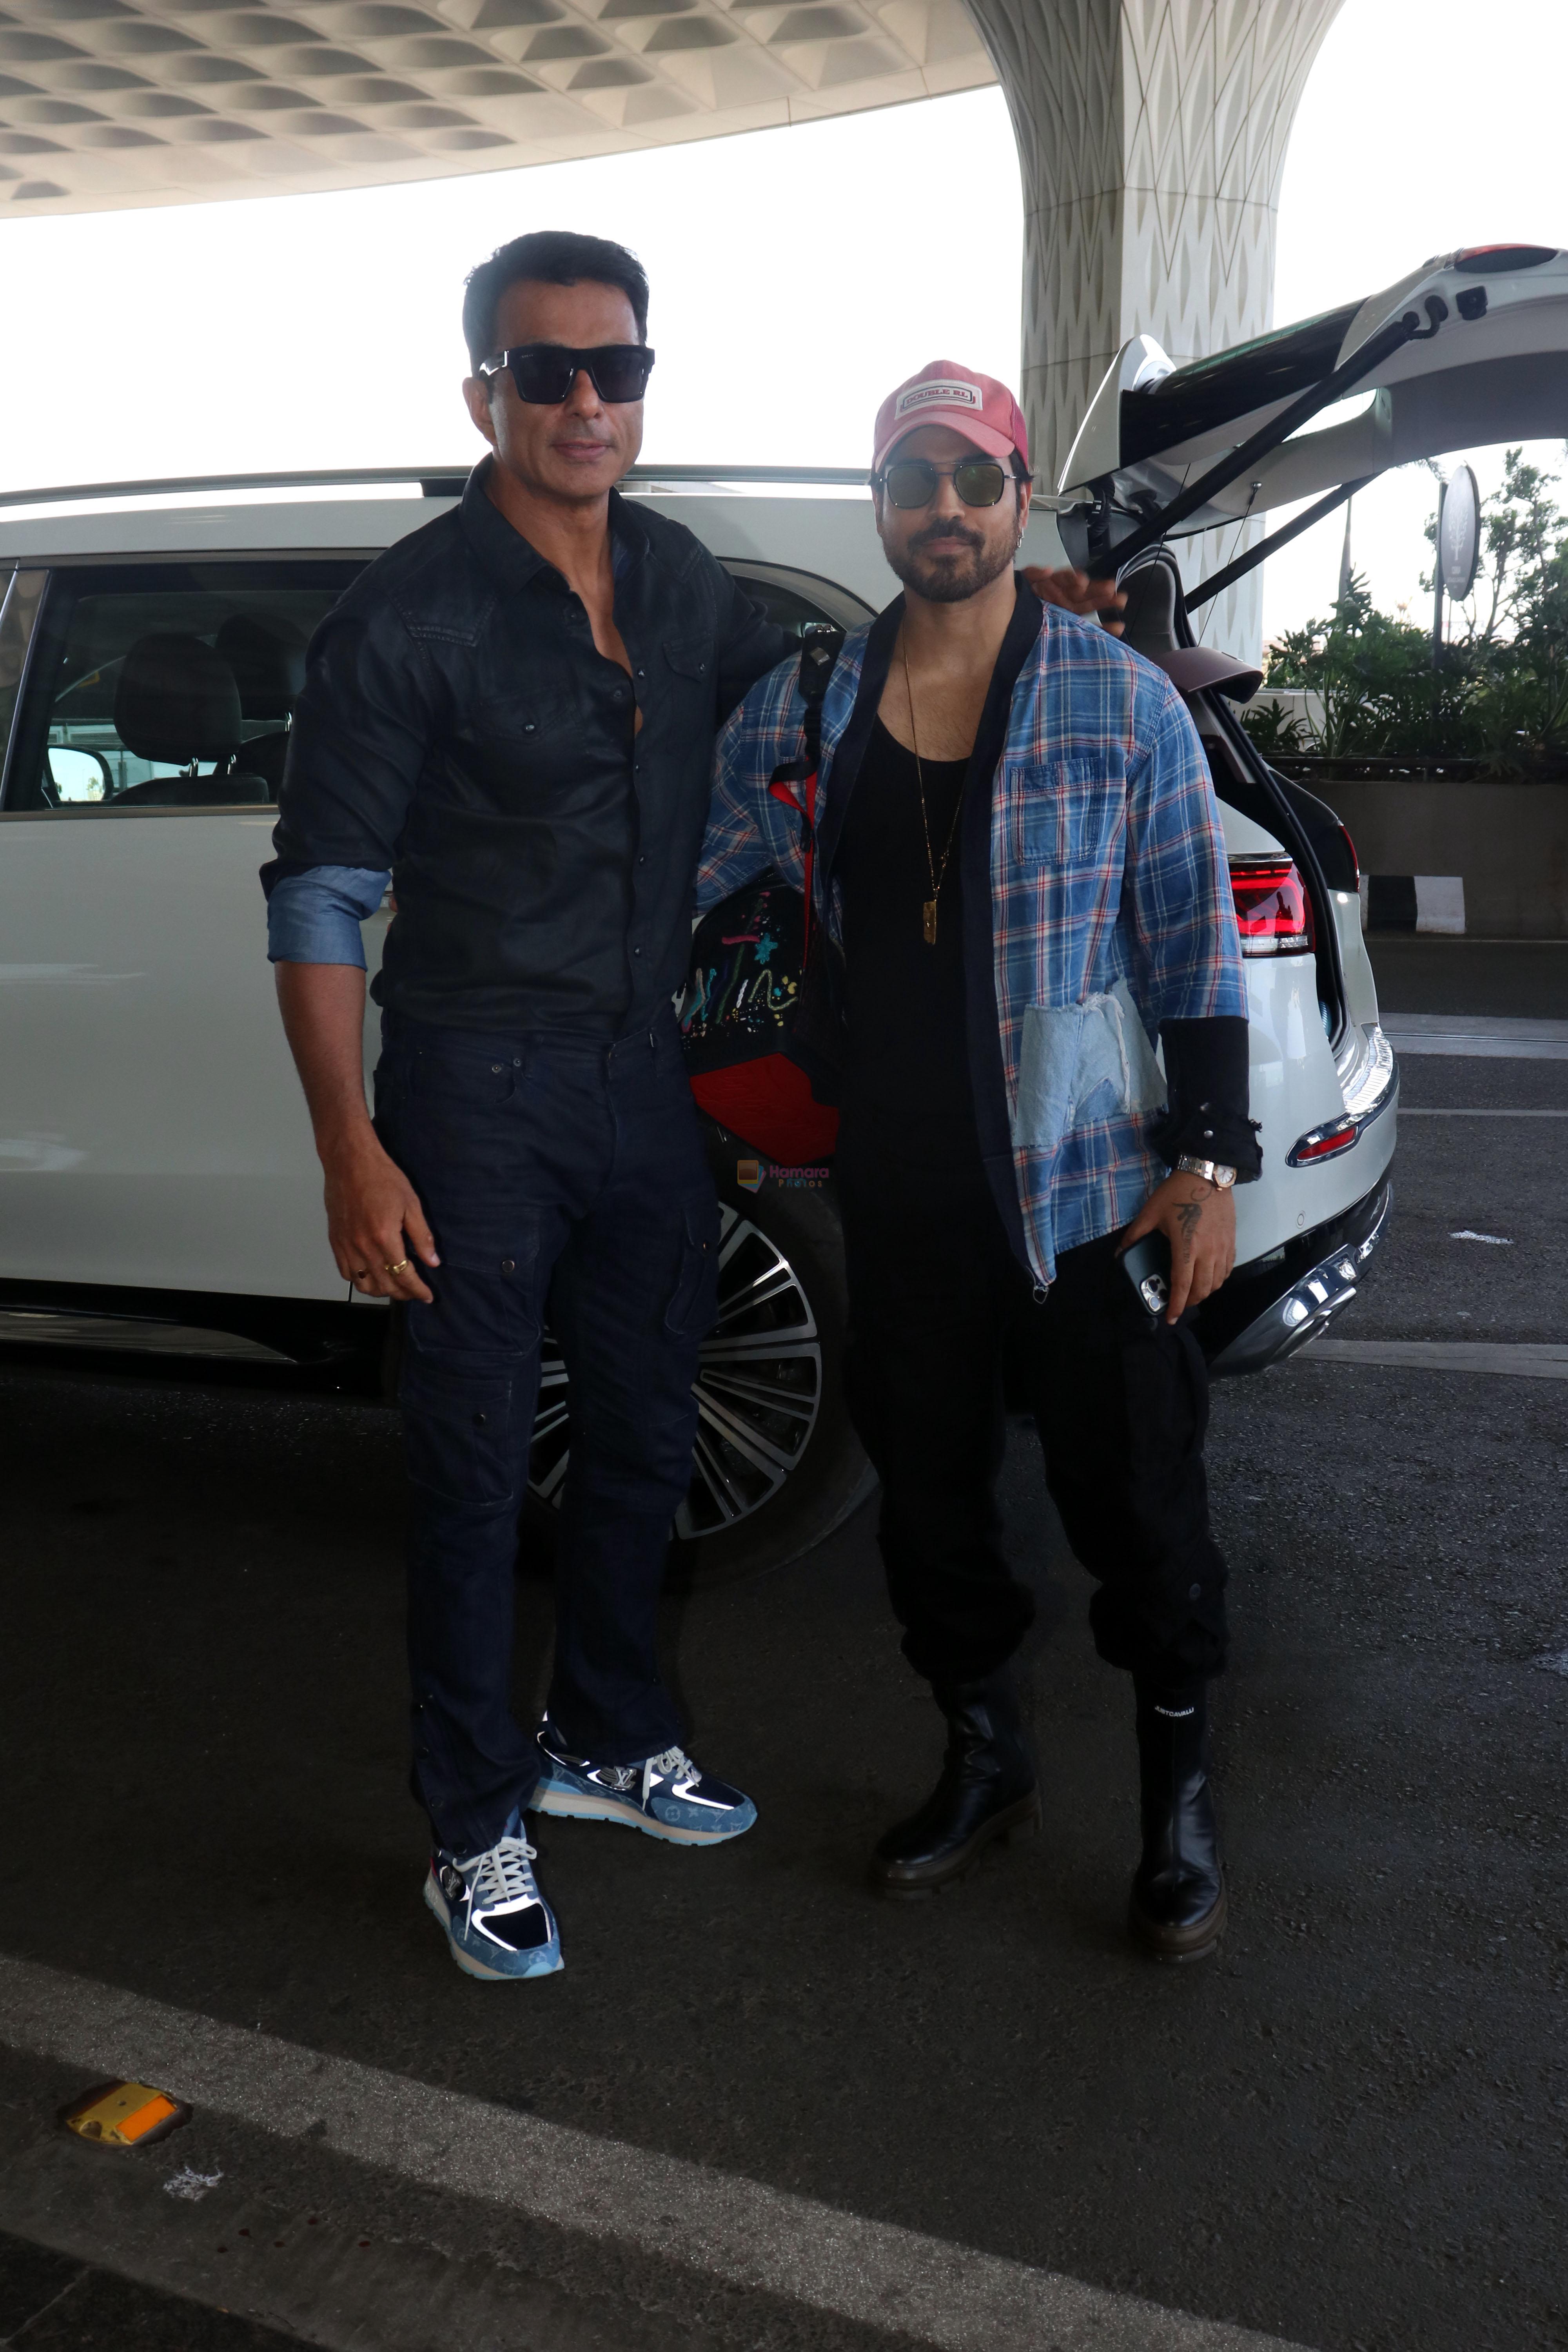 Sonu Sood with Gautam Gulati wearing all jeans, dark glasses and sneakers